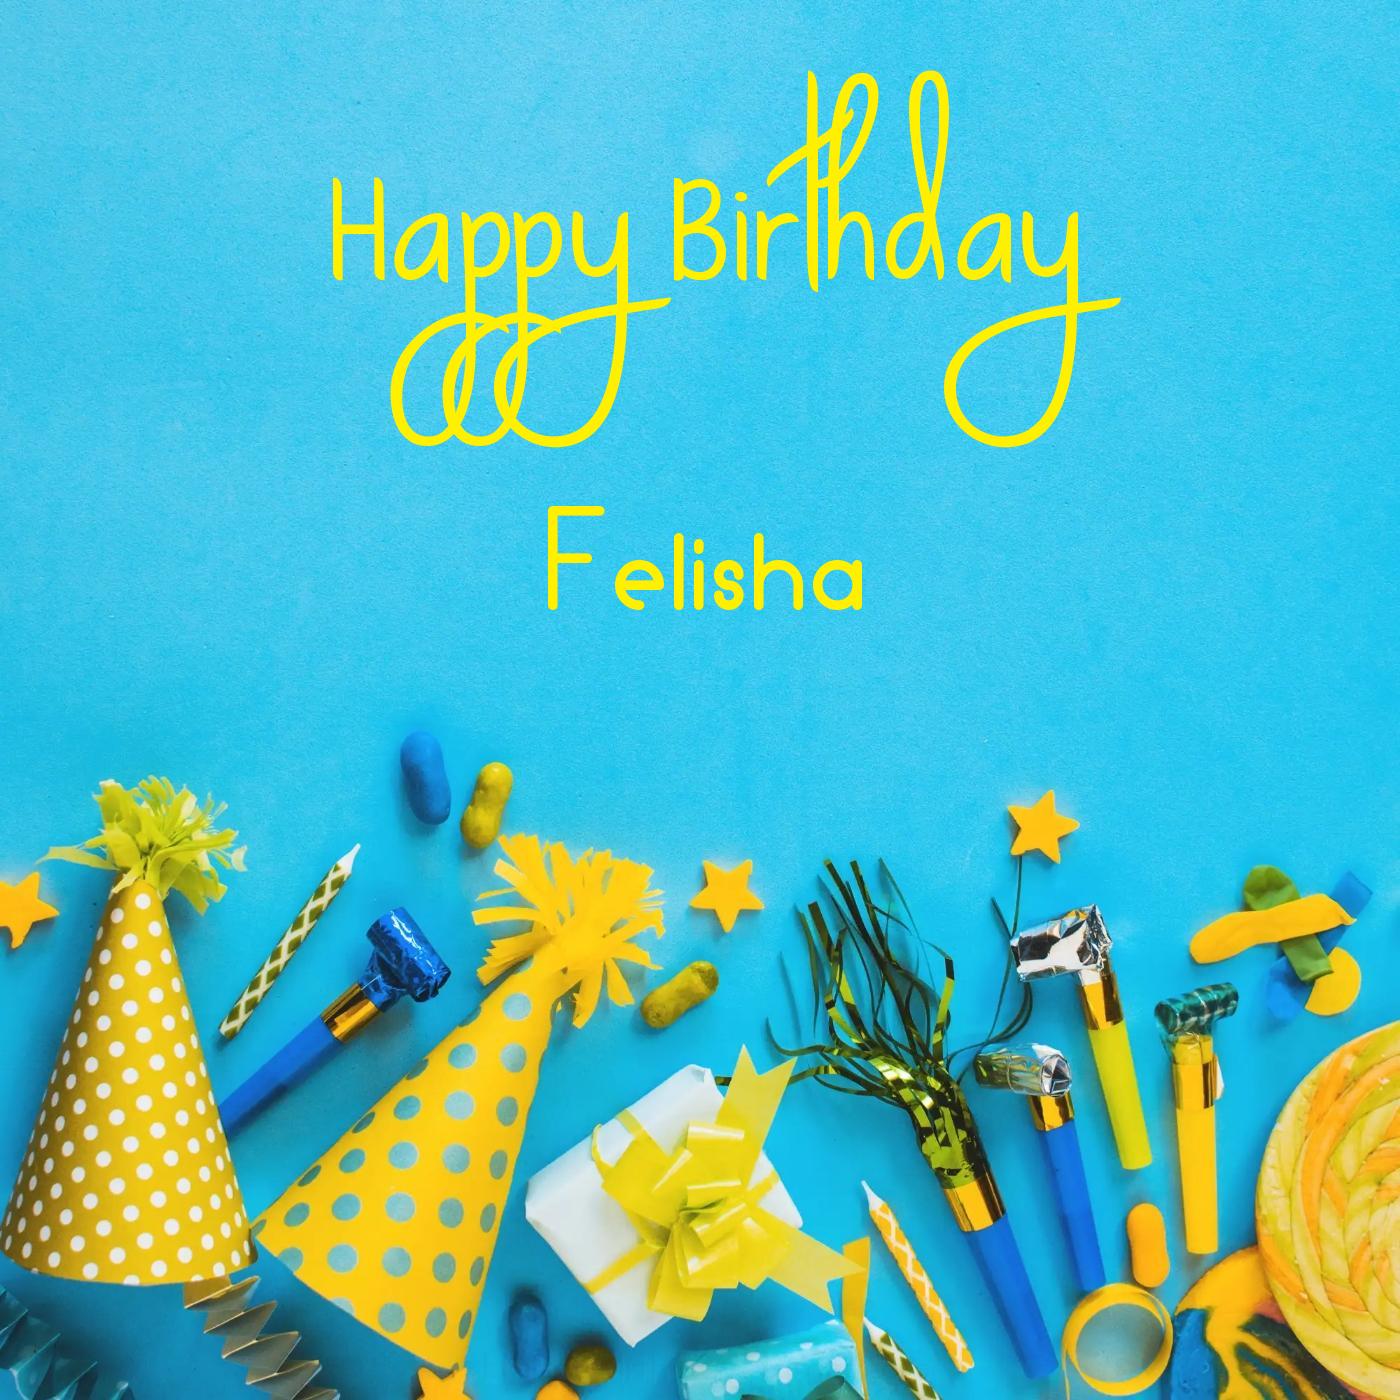 Happy Birthday Felisha Party Accessories Card